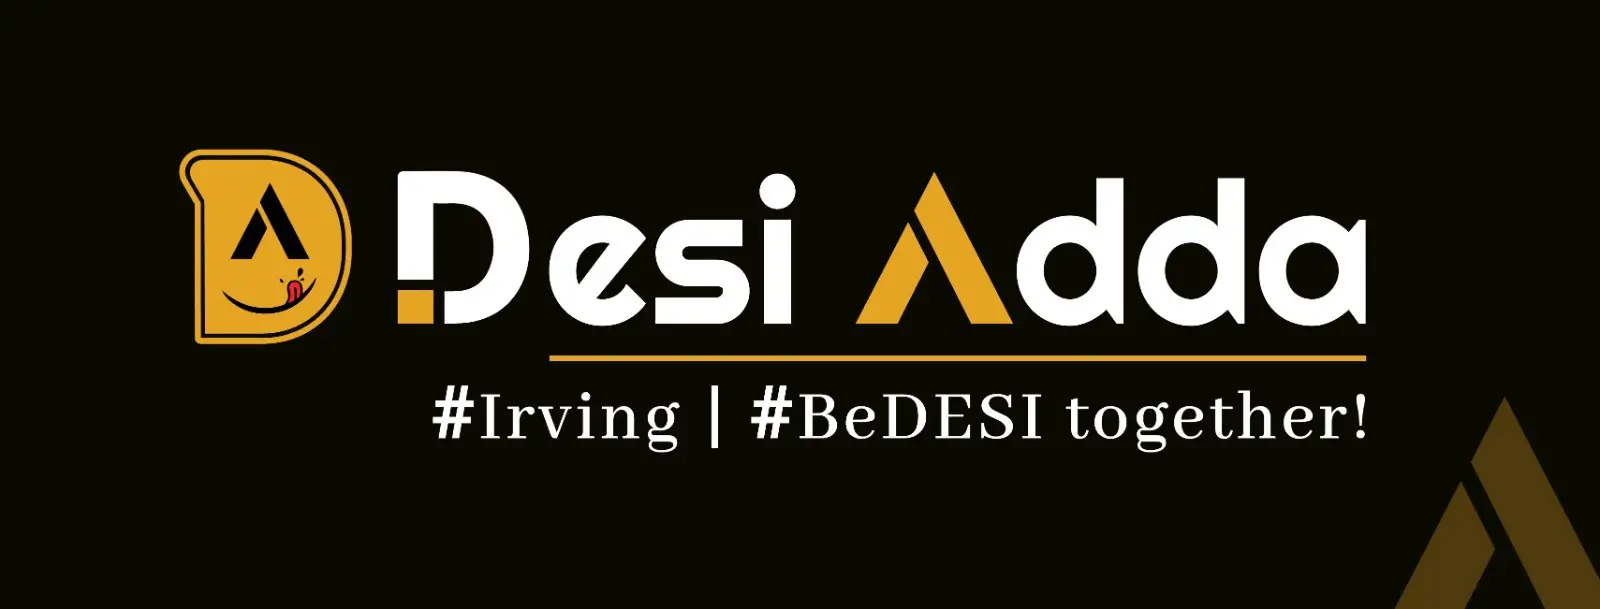 Company logo of Desi Adda